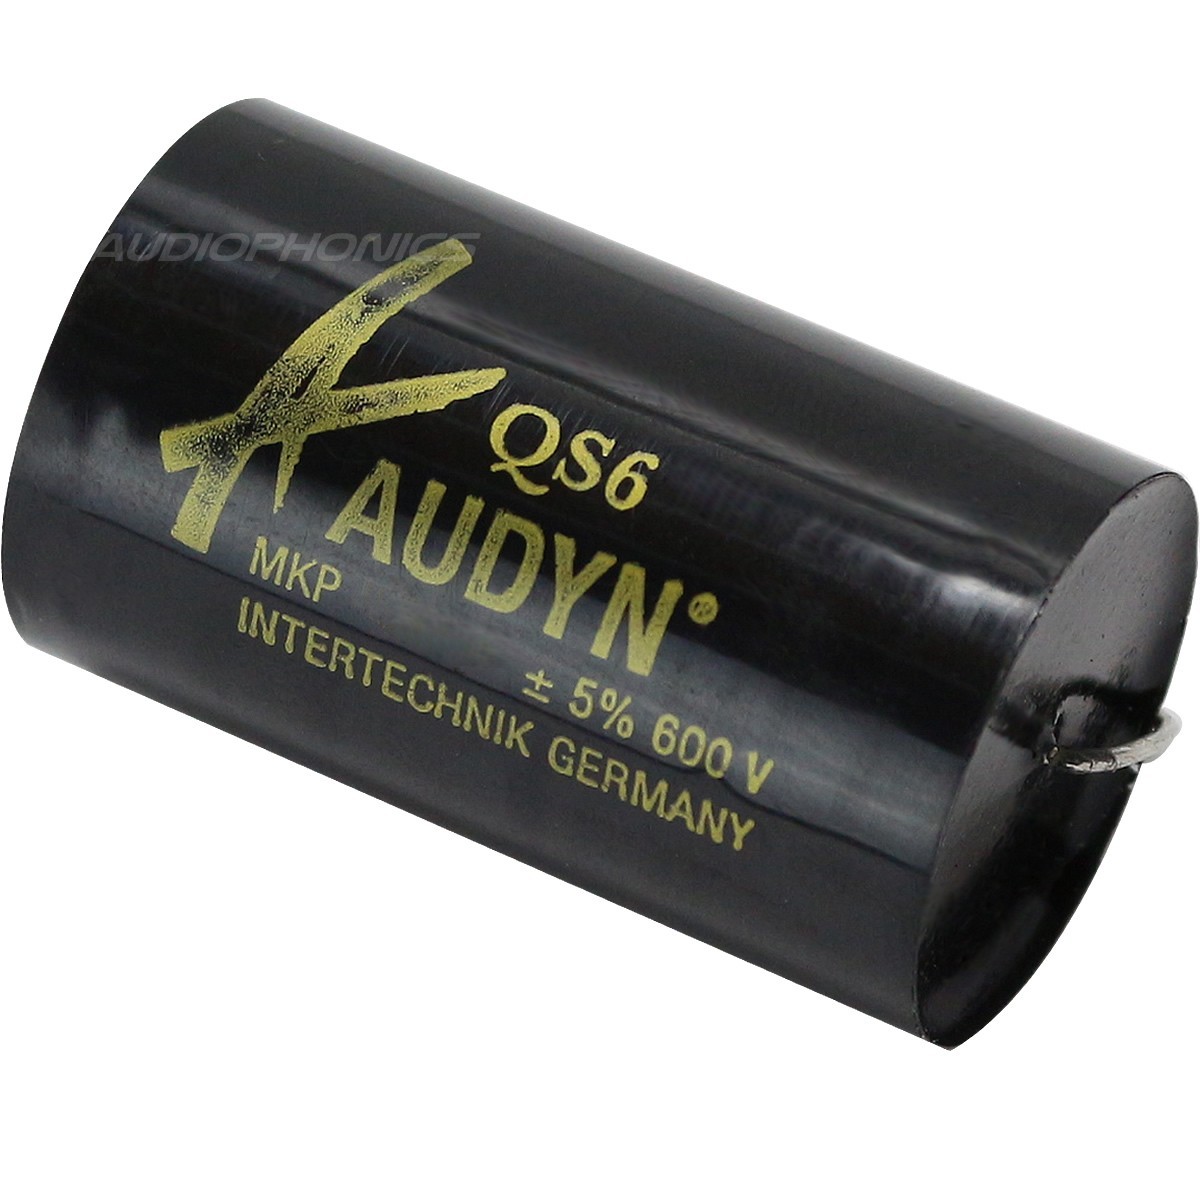 AUDYN CAP QS6 Condensateur MKP 600V 2.7µF